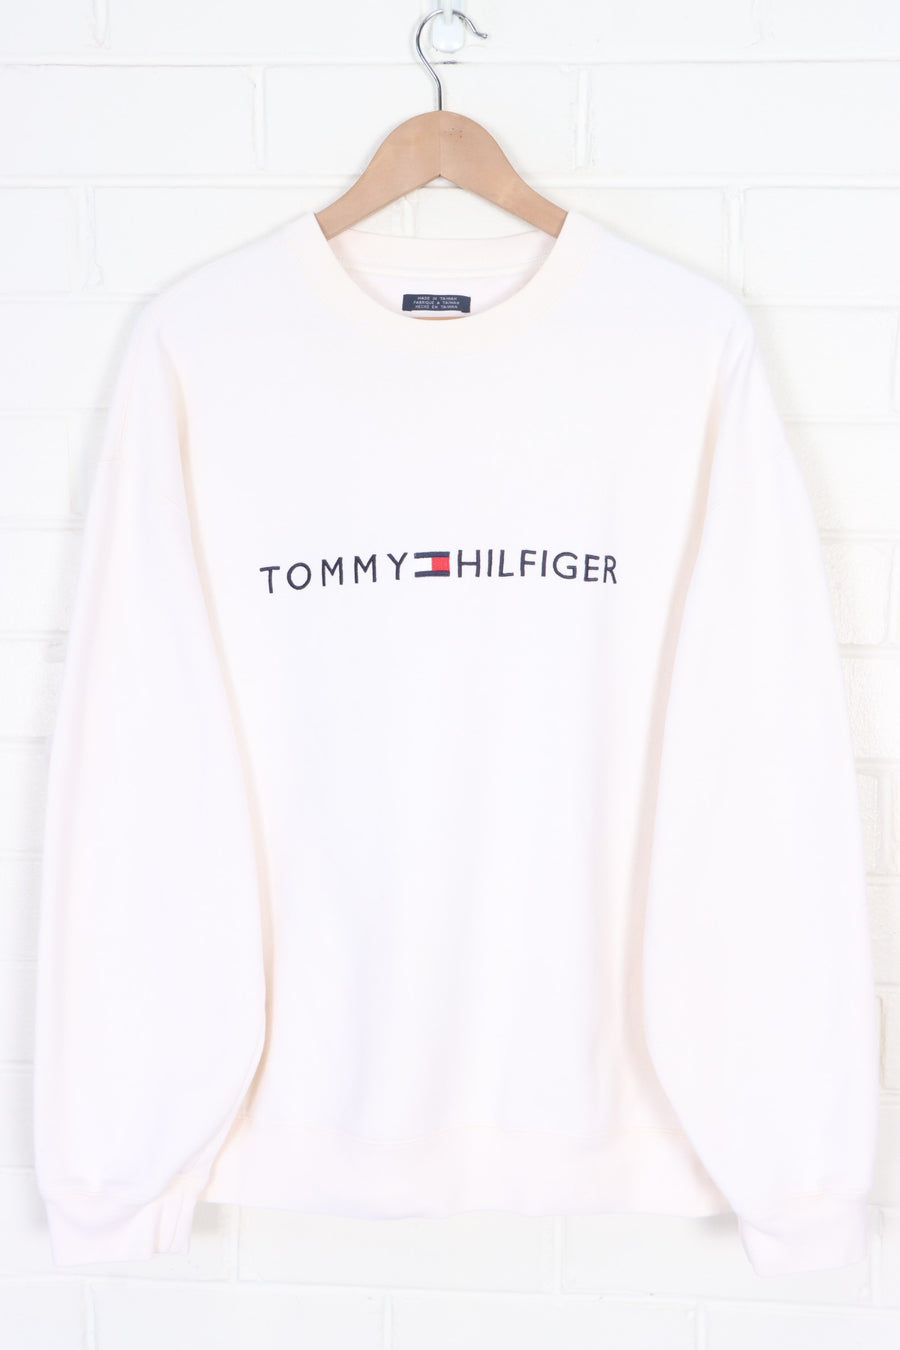 TOMMY HILFIGER Embroidered Box Logo Cream Boxy Sweatshirt (L)